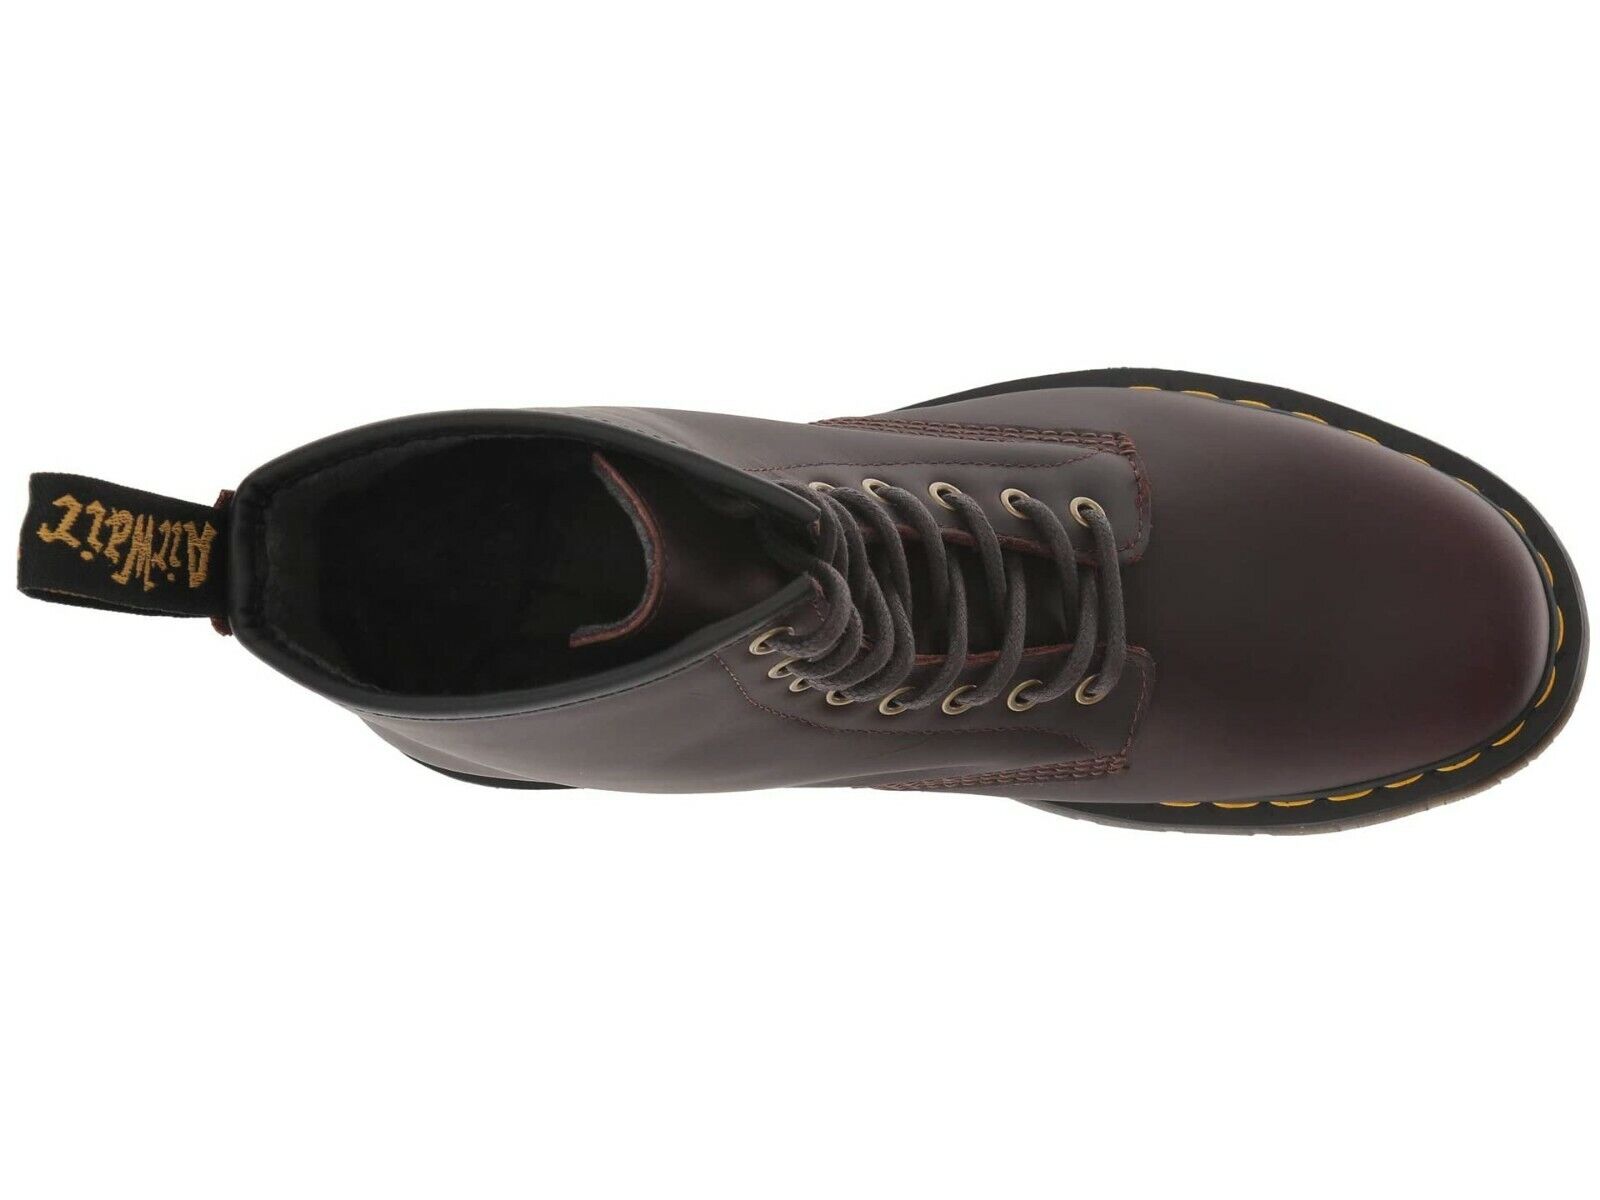 Copyright Slander Departure Unisex Shoes Dr. Martens 1460 WINTERGRIP Leather Ankle Boots 24038247 COCOA  | eBay